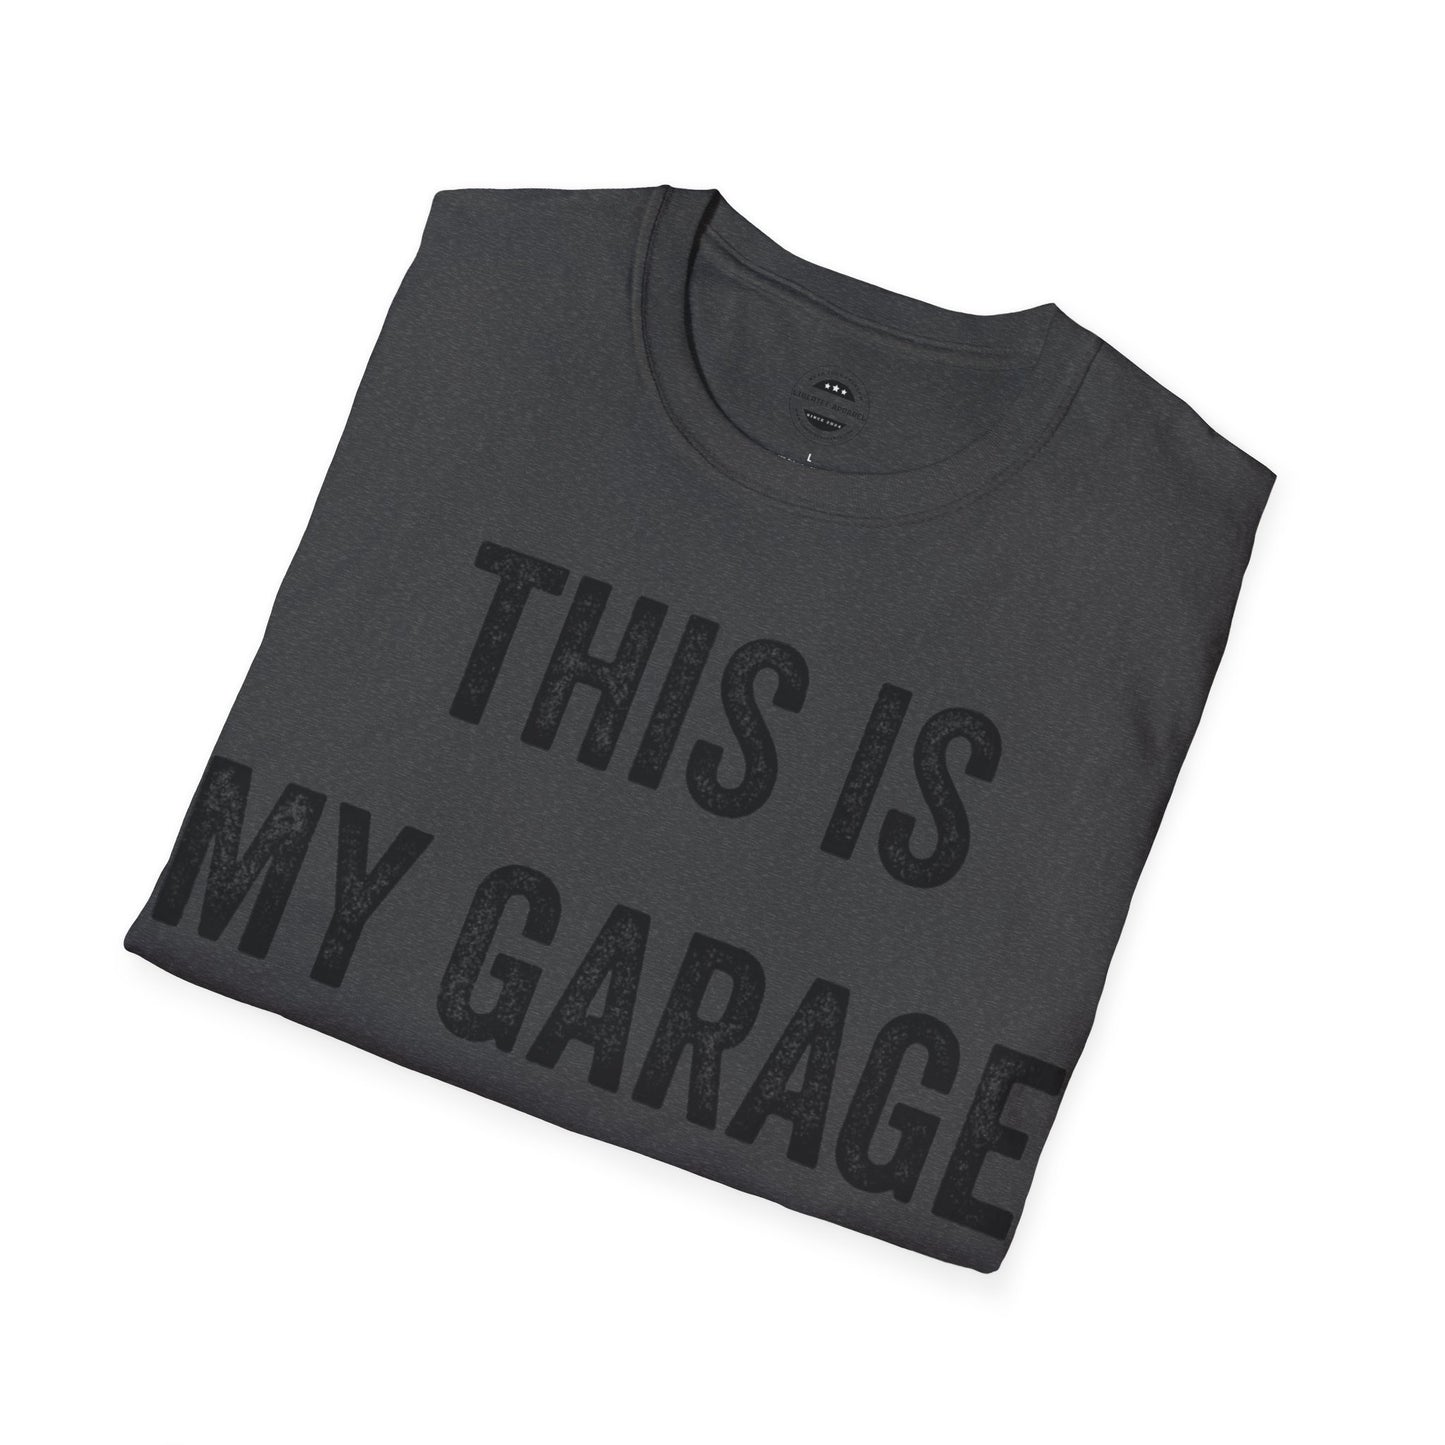 My Garage Shirt Unisex Softstyle T-Shirt